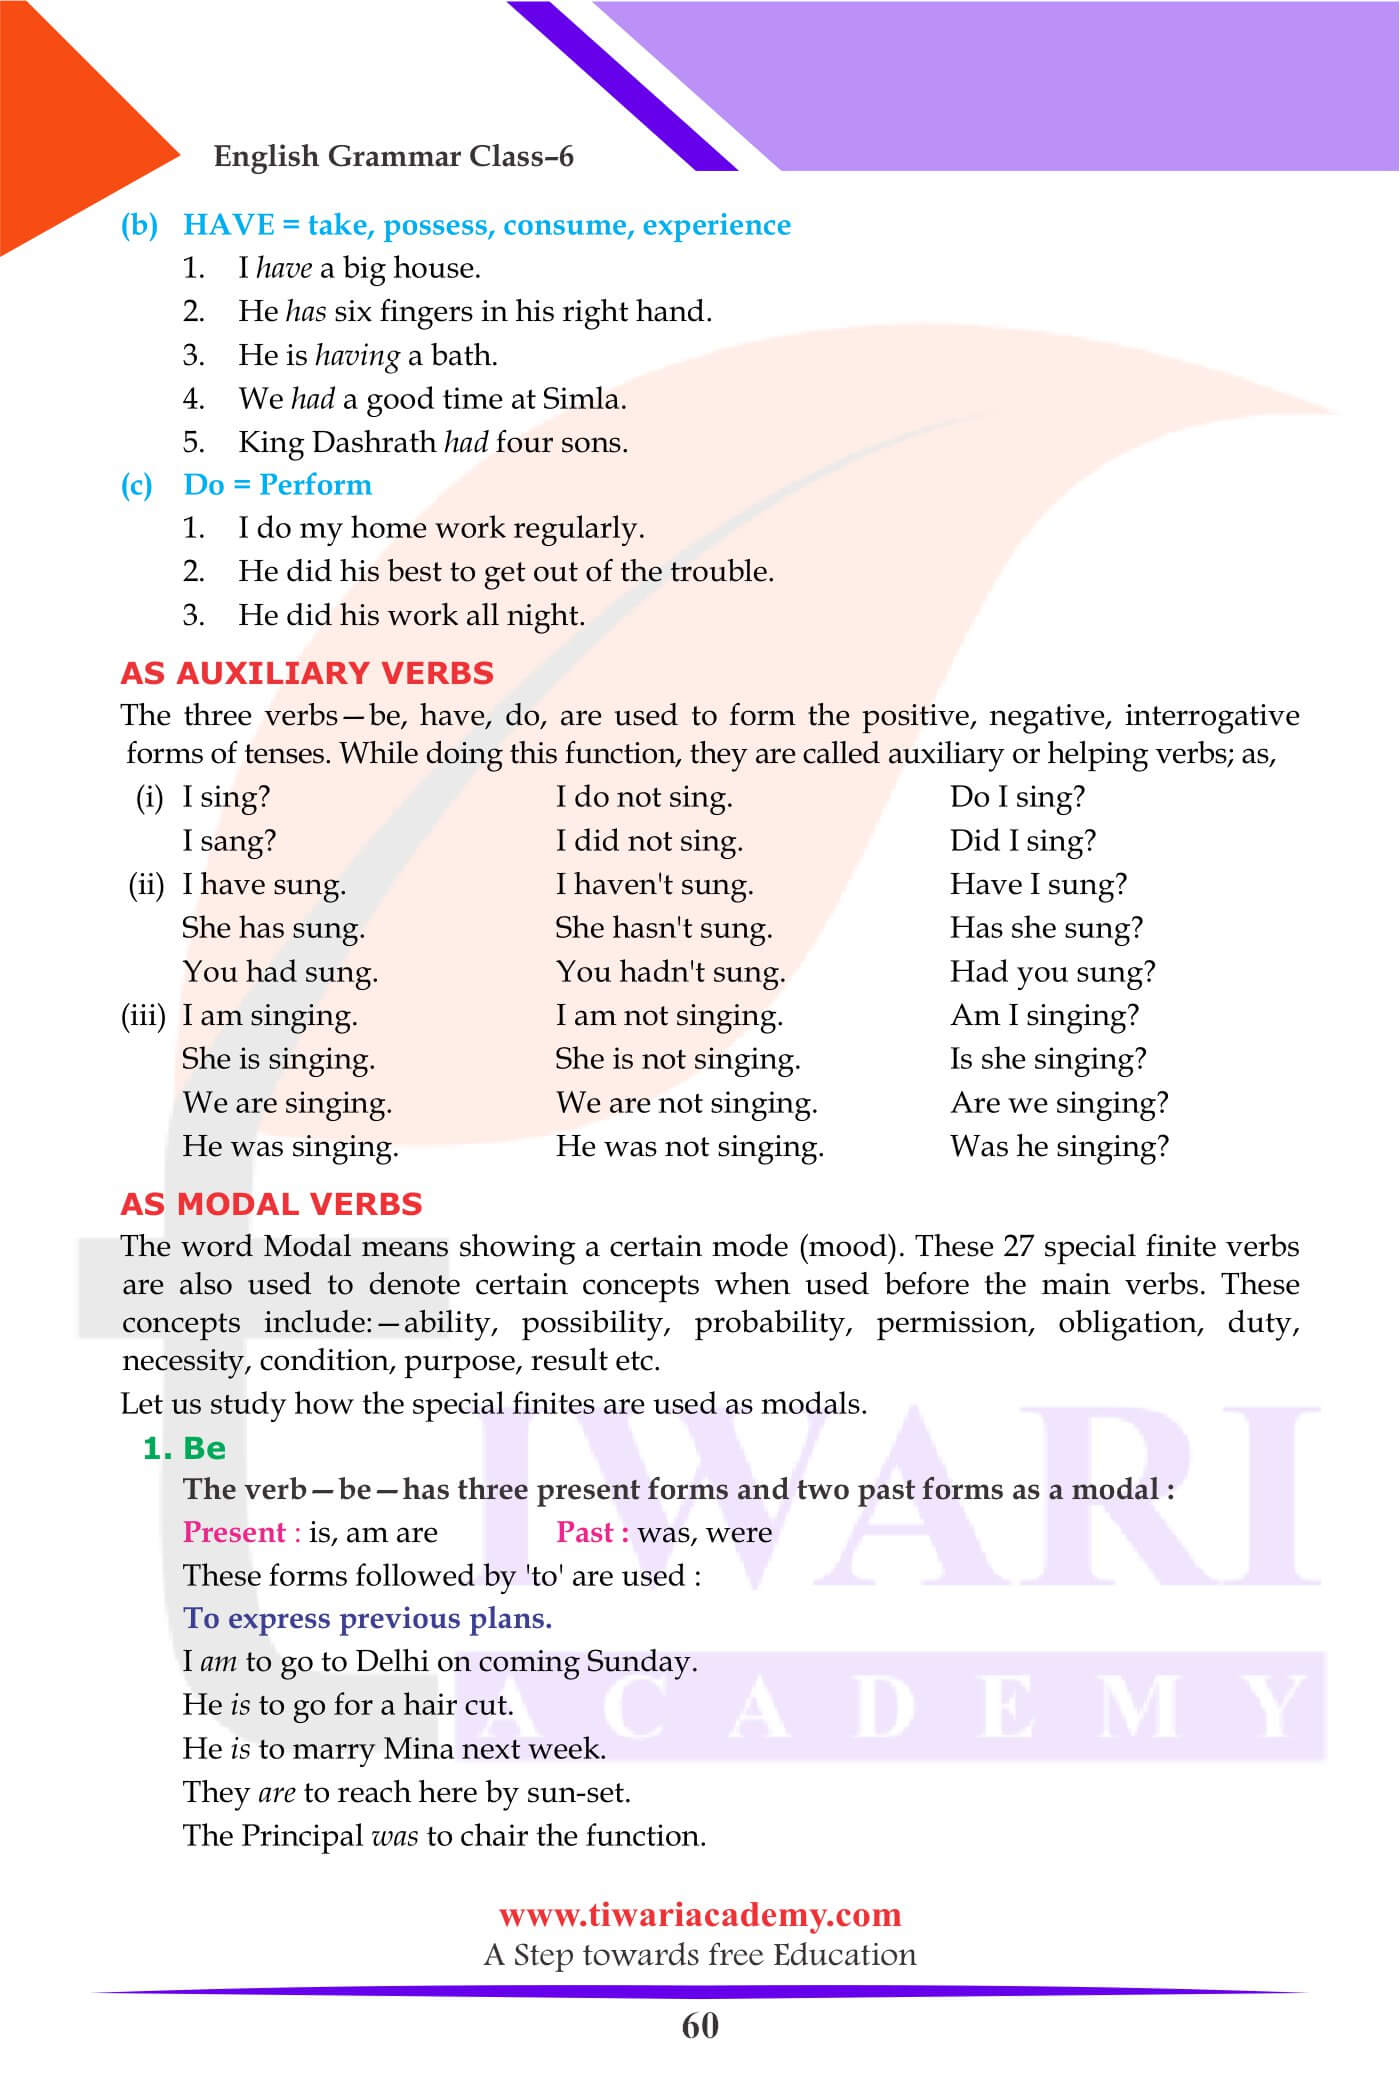 Class 6 English Grammar Special Finite Verbs